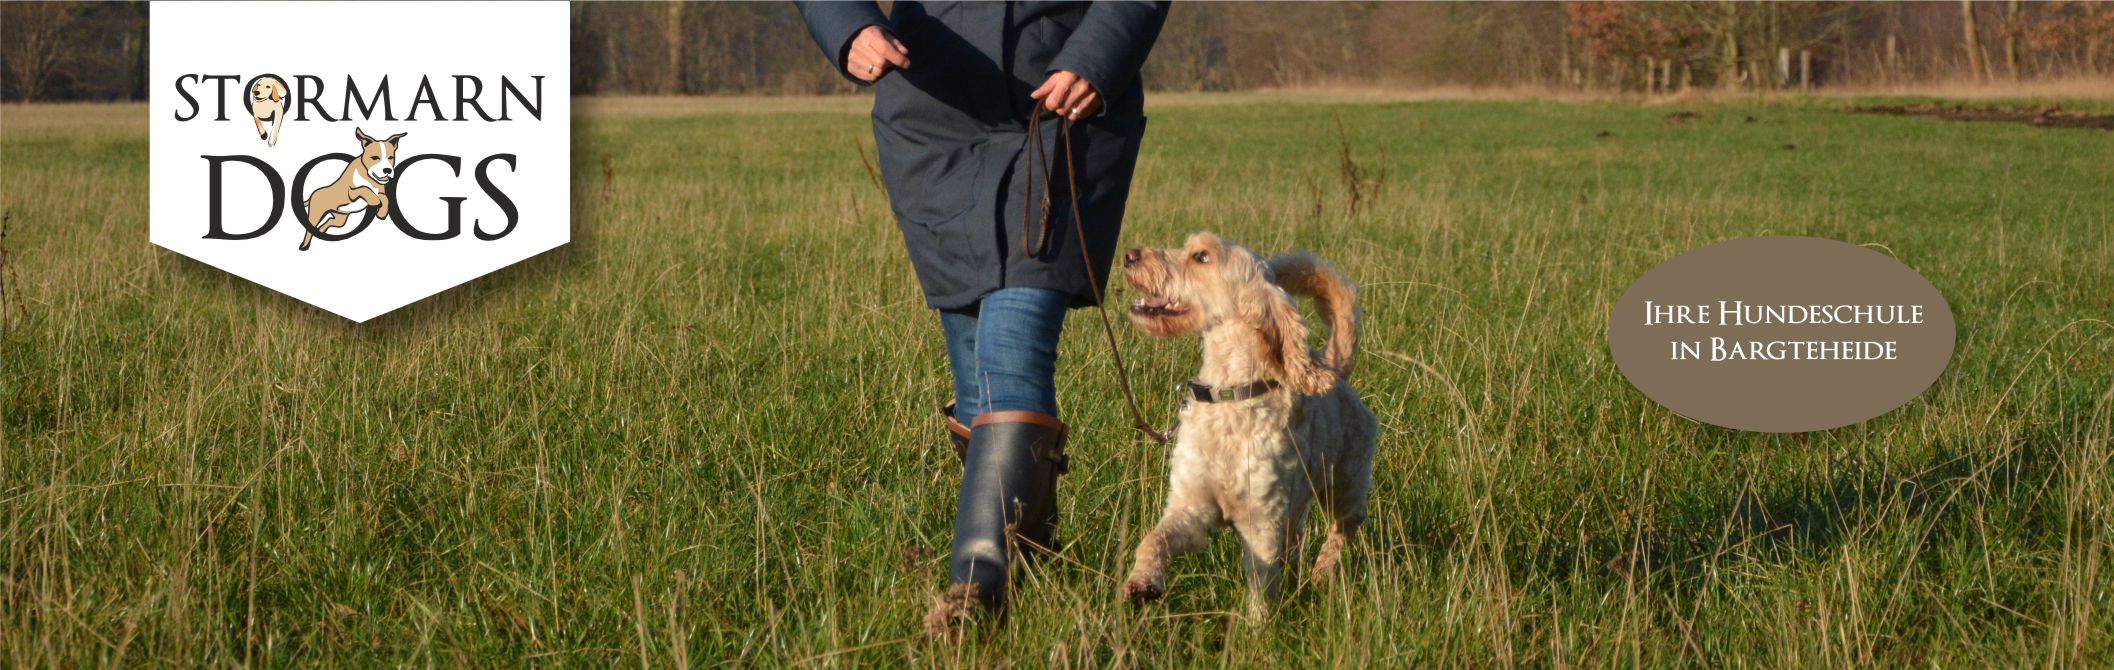 Leinenführung lernen in der Hundeschule Stormarn Dogs - Hund geht bei Fuß